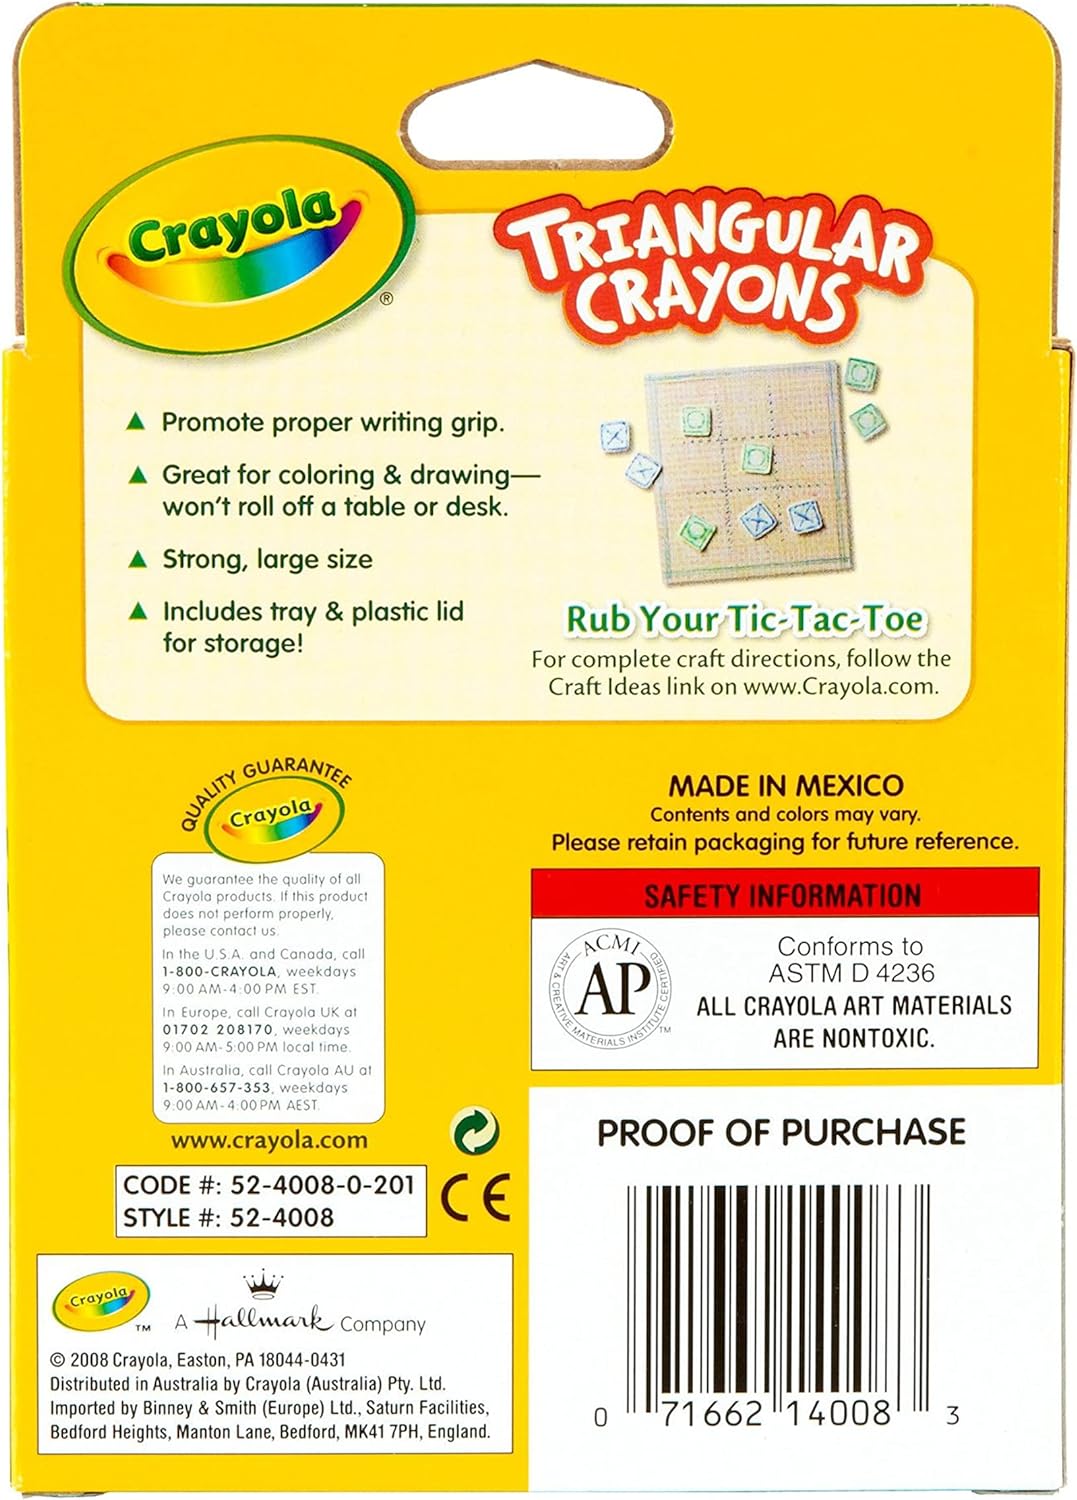 Crayola Anti-Roll Triangular Crayons - Pack of 8